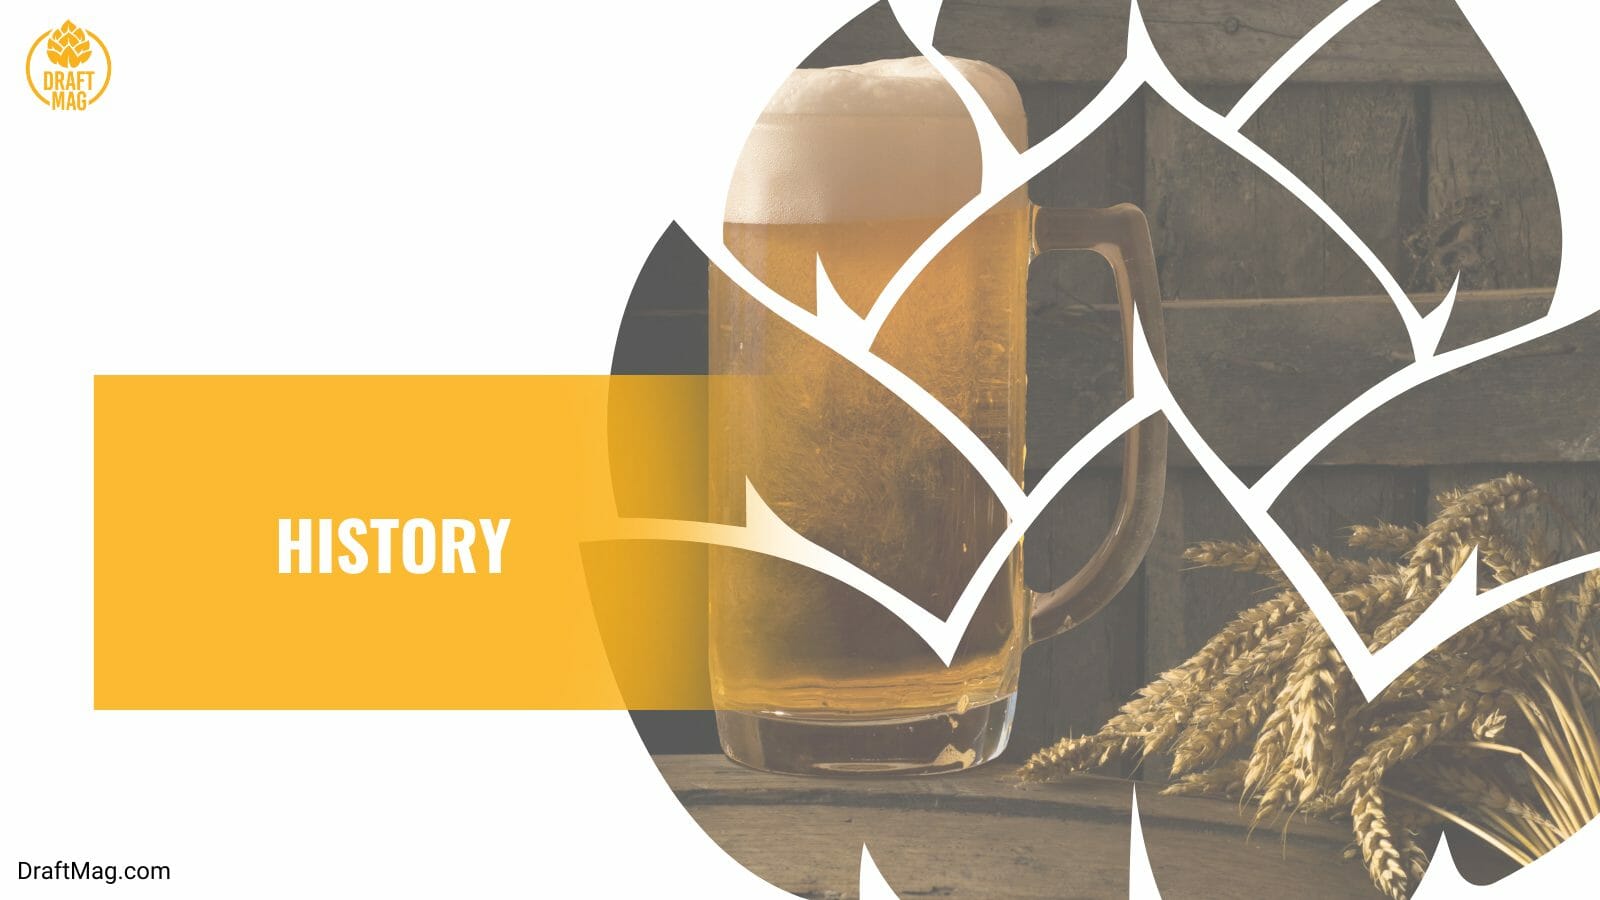 Blatz beer amazing history